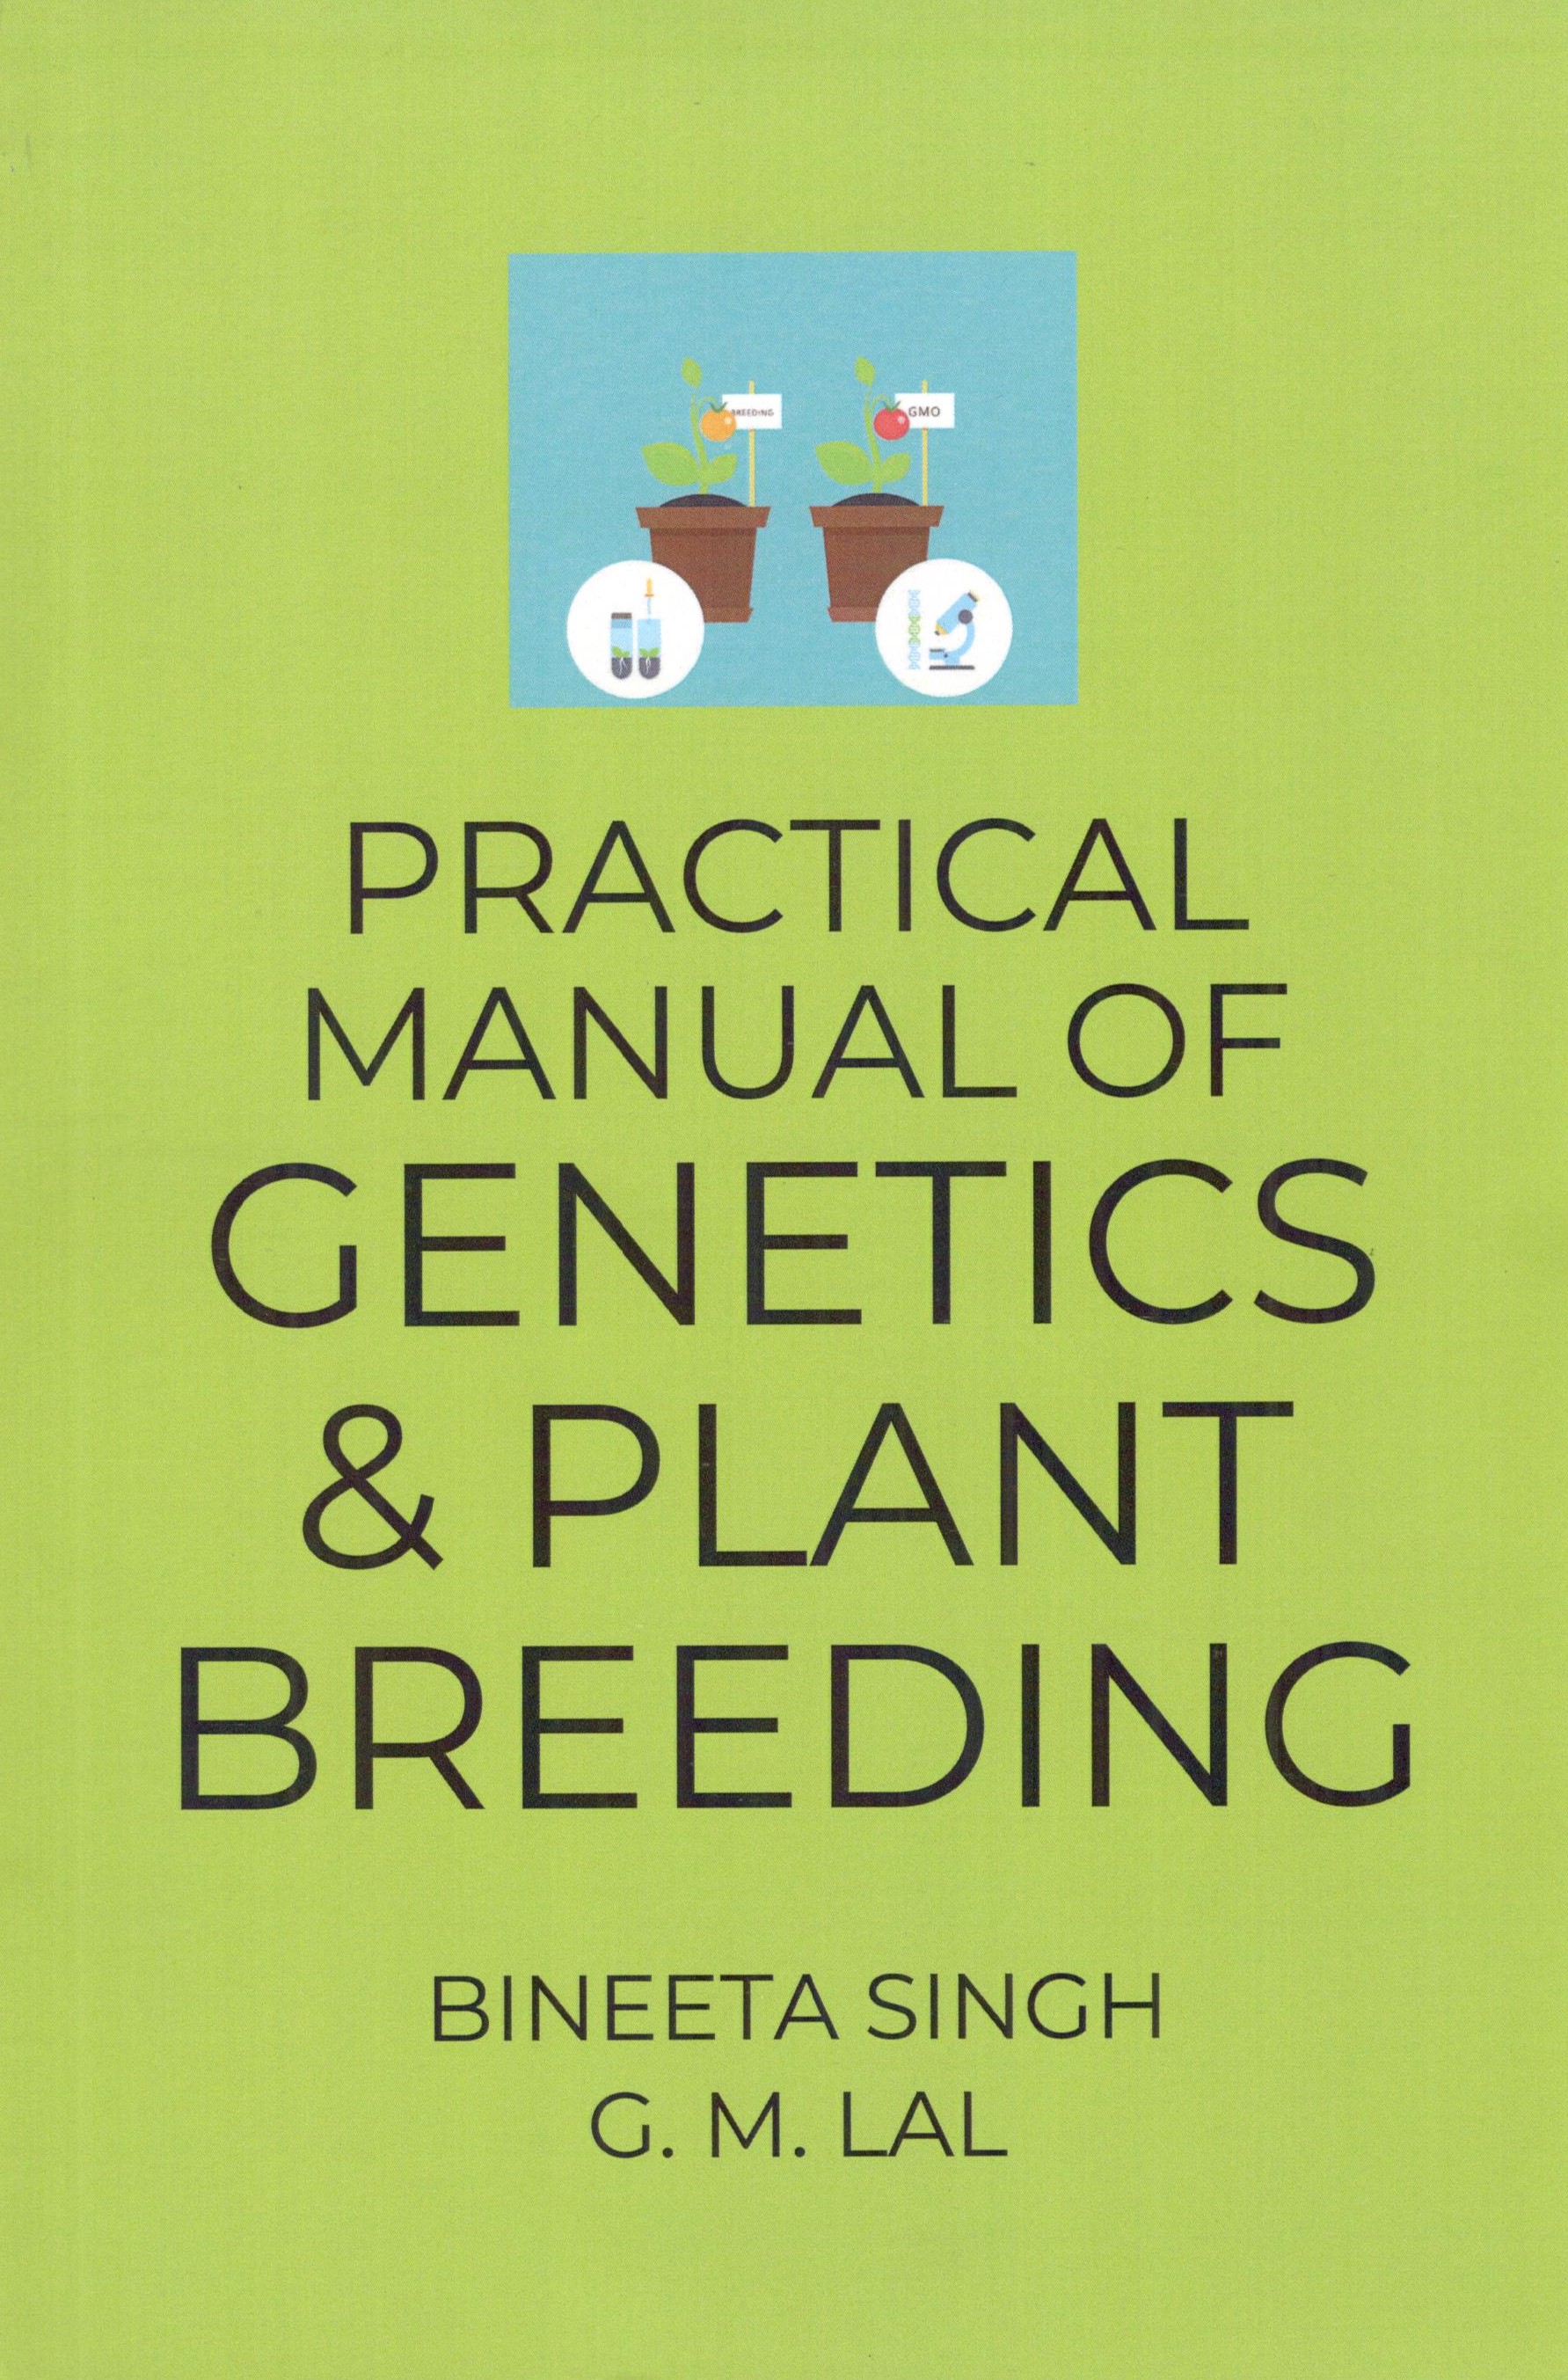 Practical Manual of Genetics & Plant Breeding